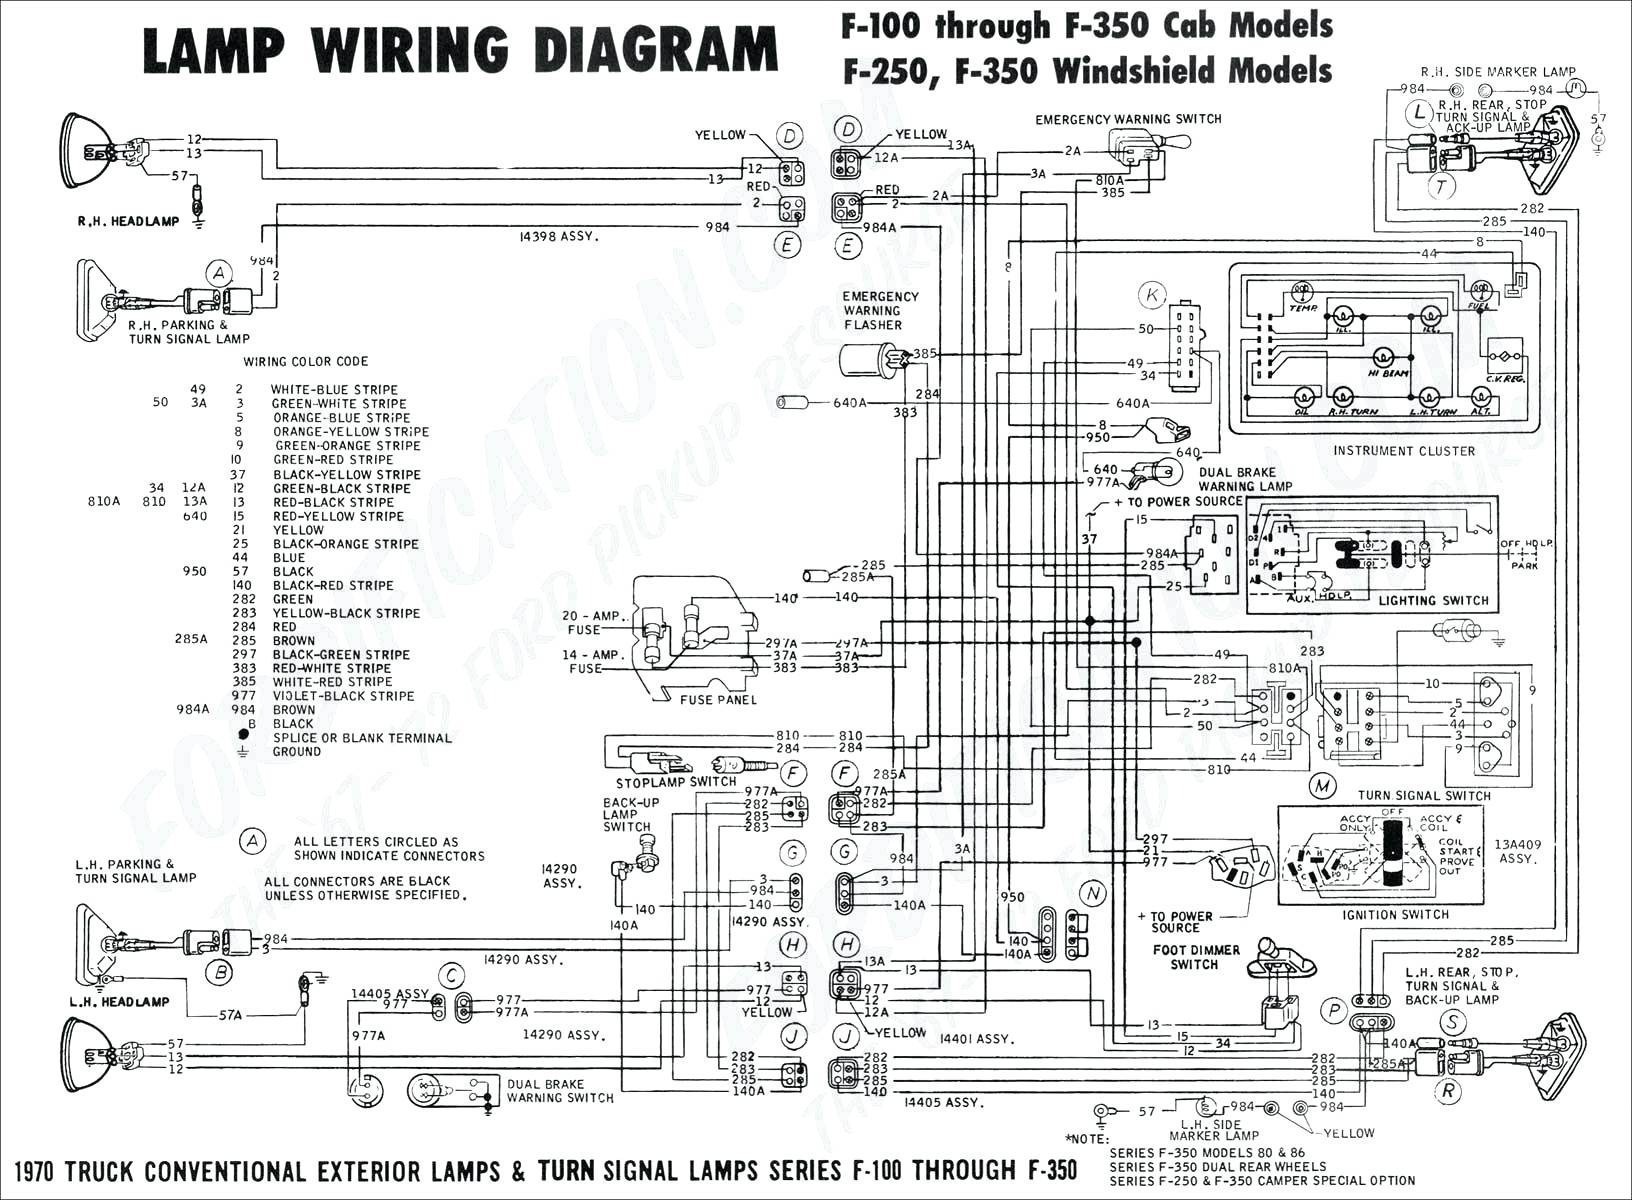 4 Way Wiring Diagram Luxury Trailer Wiring Diagram 4 Way Unbelievable Graphs Beautiful 2005 Subaru Legacy